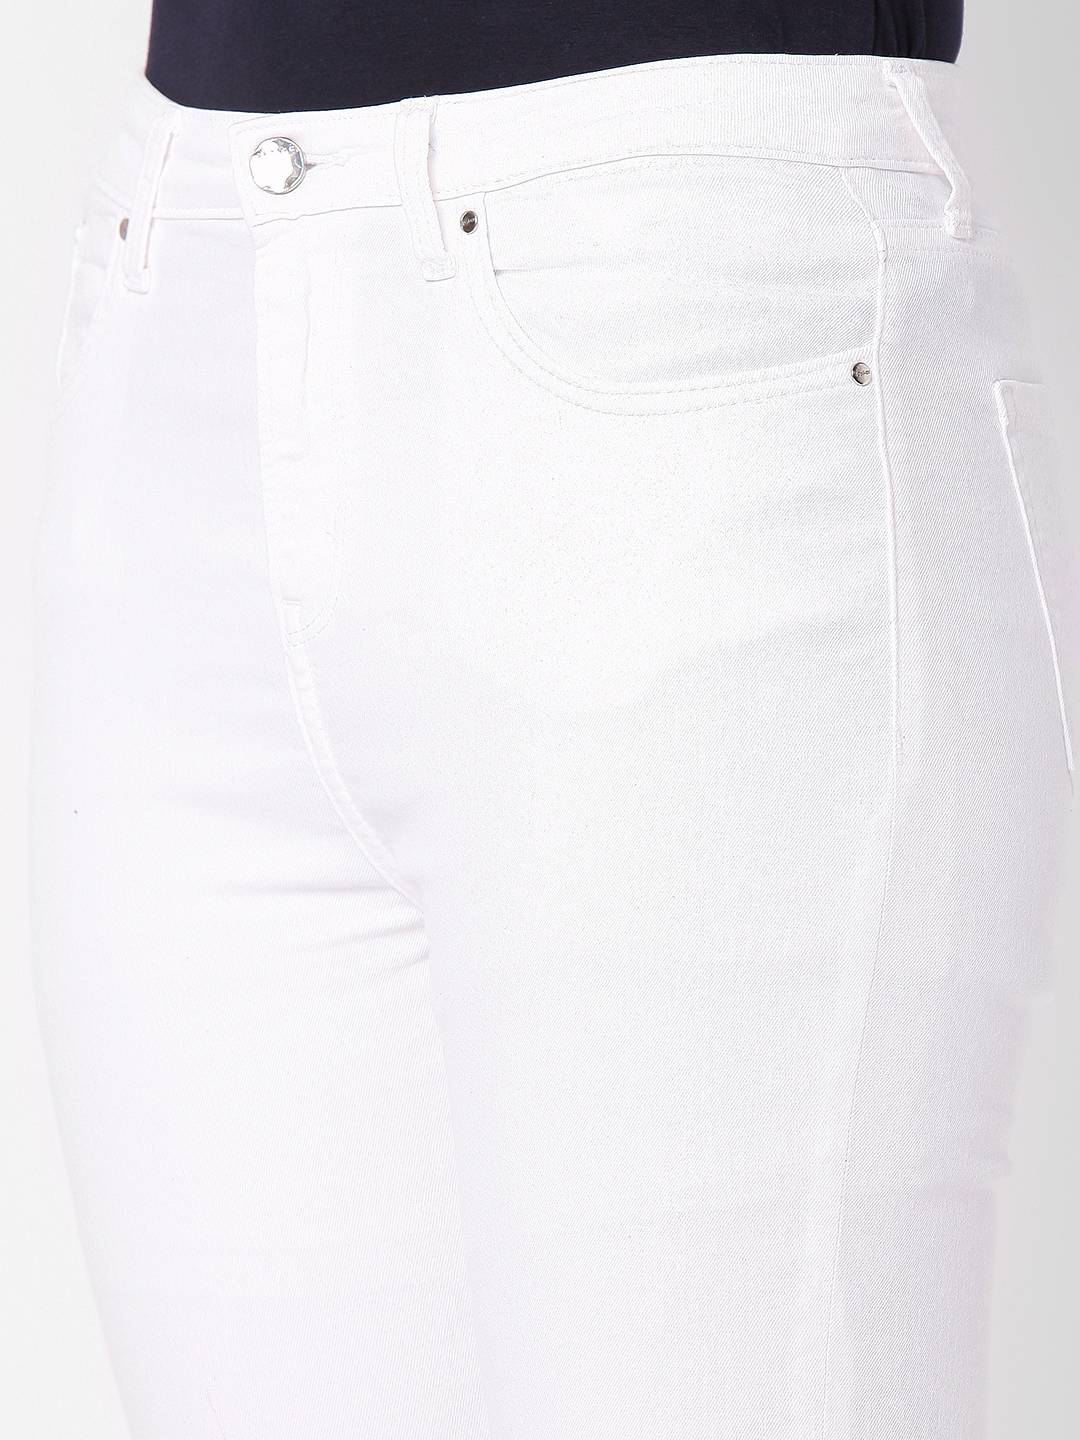 spykar | Women's White Cotton Solid Skinny Jeans 5